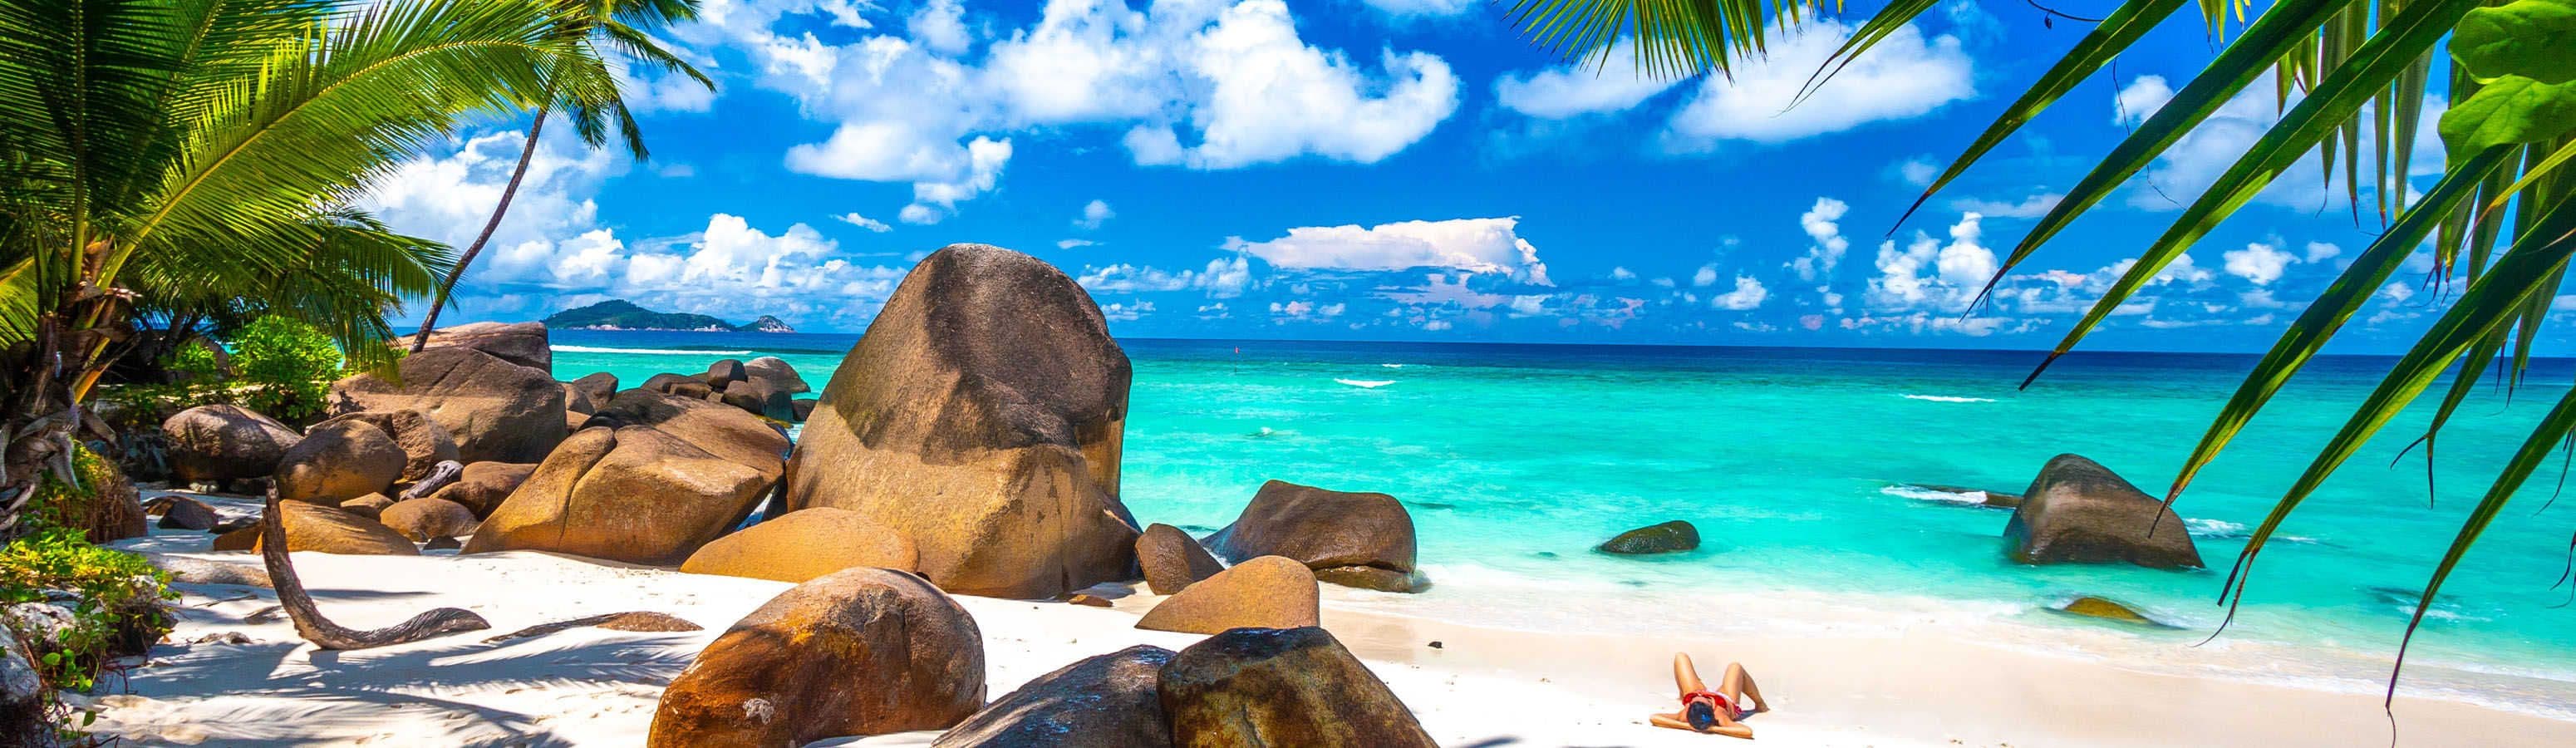 Seychelles - paradise on earth